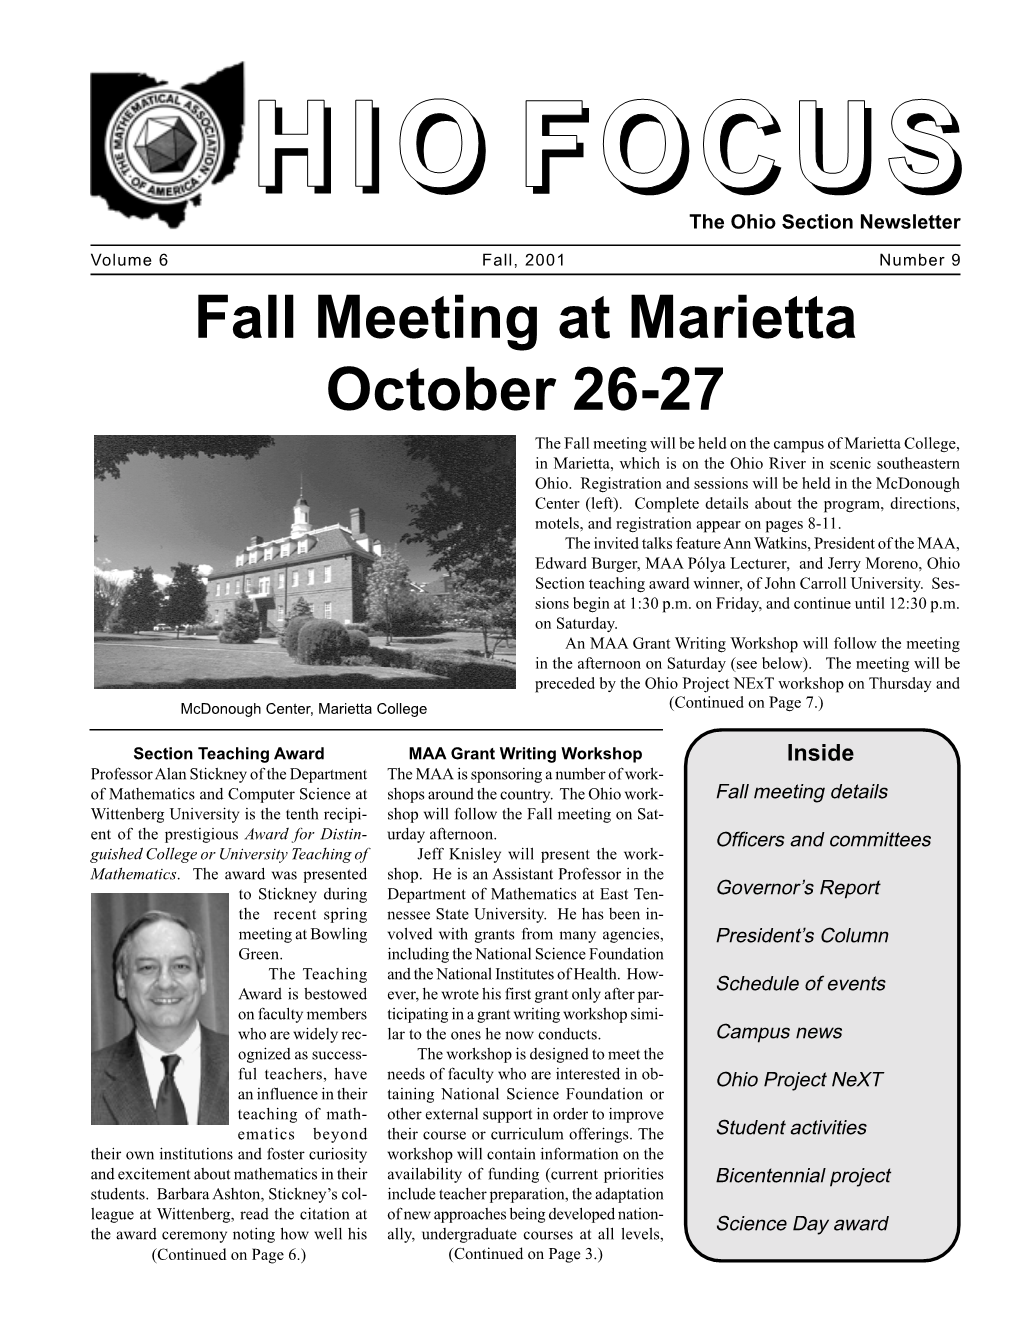 Fall Meeting at Marietta October 26-27